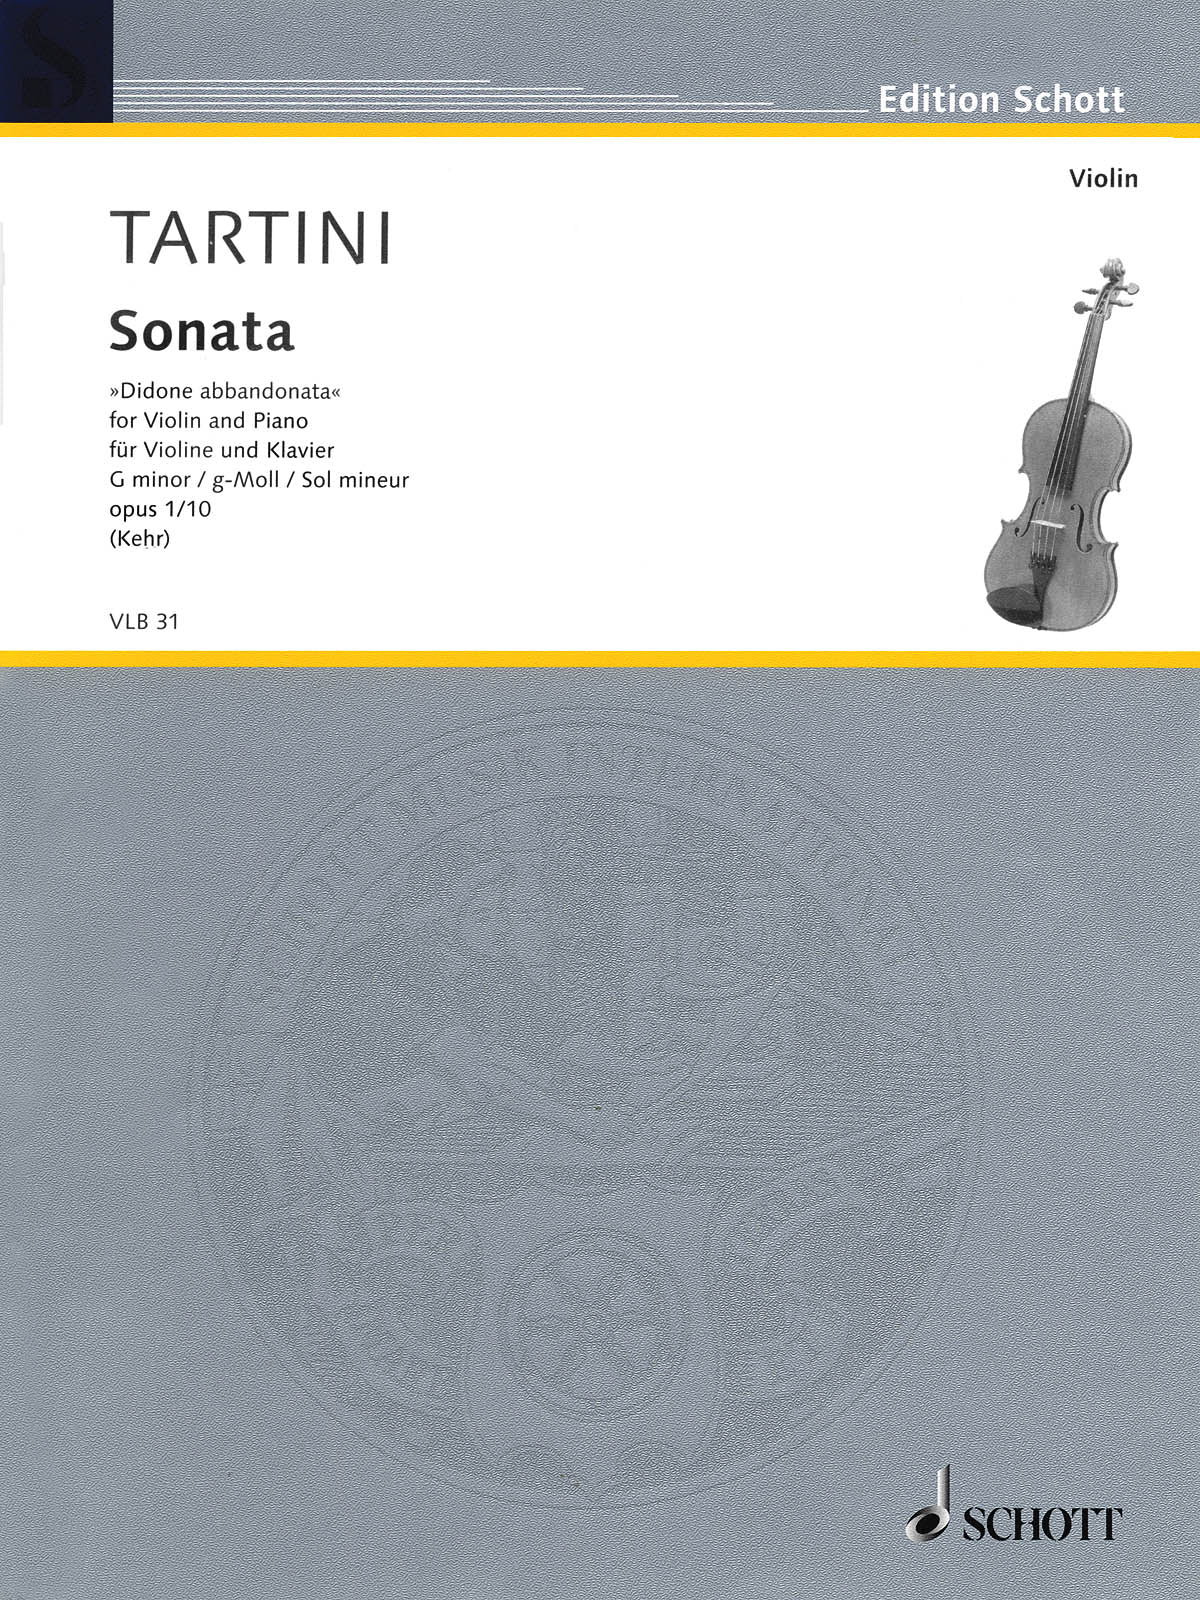 Tartini: Sonata in G Minor ("Didone abbandonata"), Op. 1, No. 10